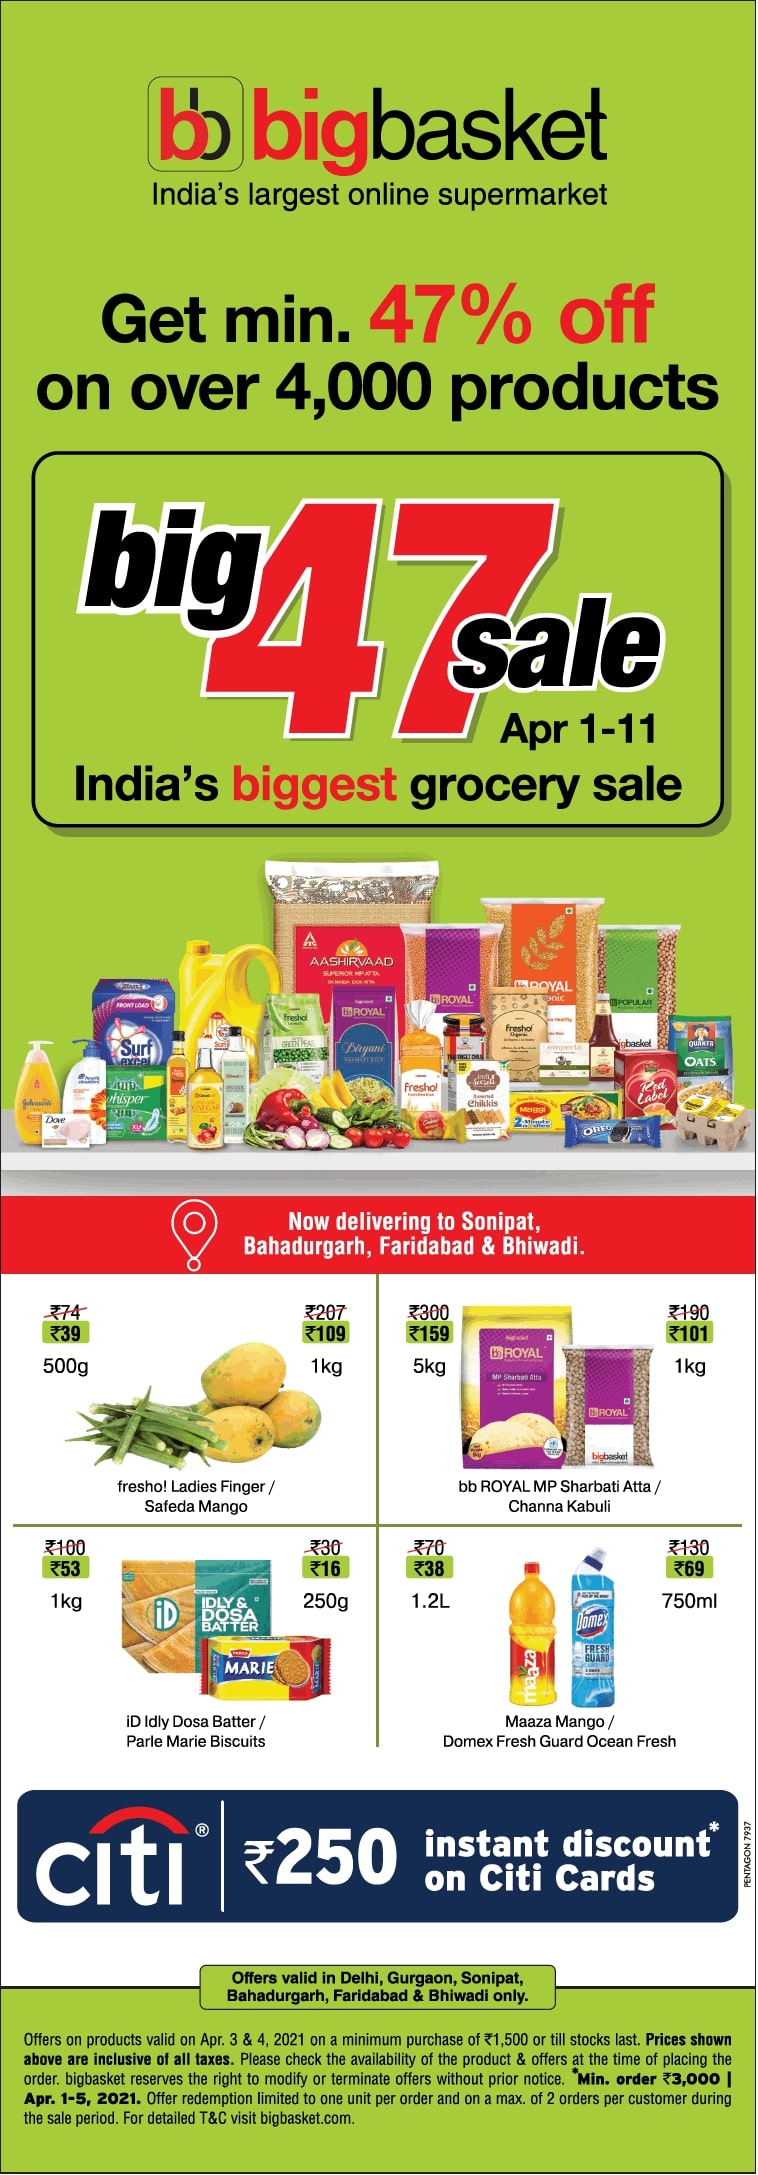 bigbasket-big-47-sale-indias-biggest-grocery-sale-ad-times-of-india-delhi-03-04-2021